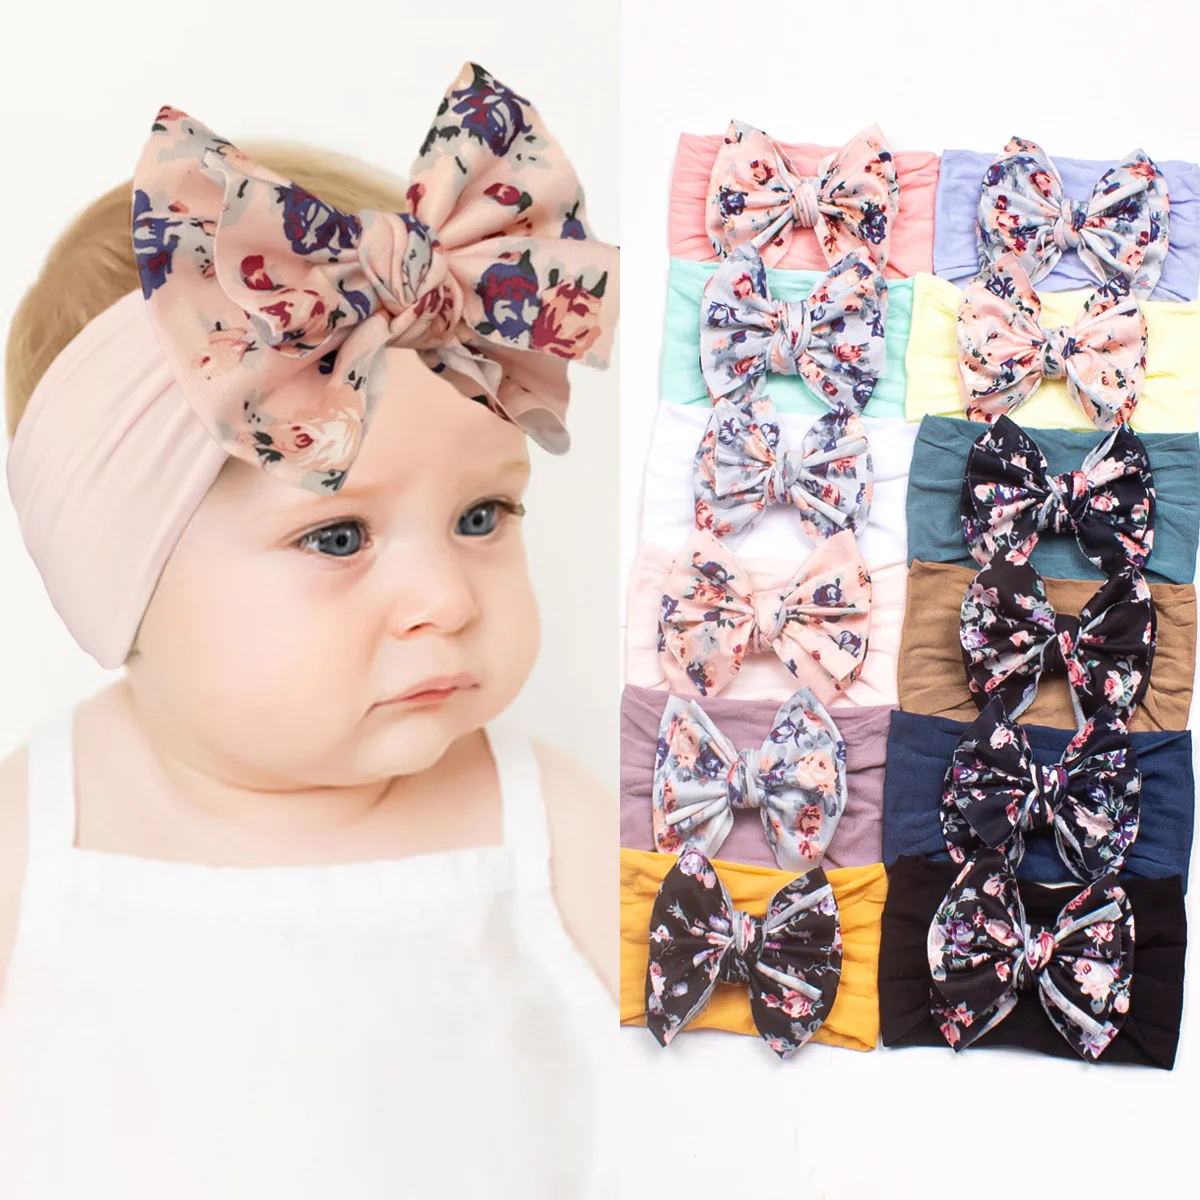 

Fashion Baby Top Knot Headbands Kids Headwrap Cotton Flower Cross elastic Girls Turban Tie Headwear Hair Band Accessories Gifts